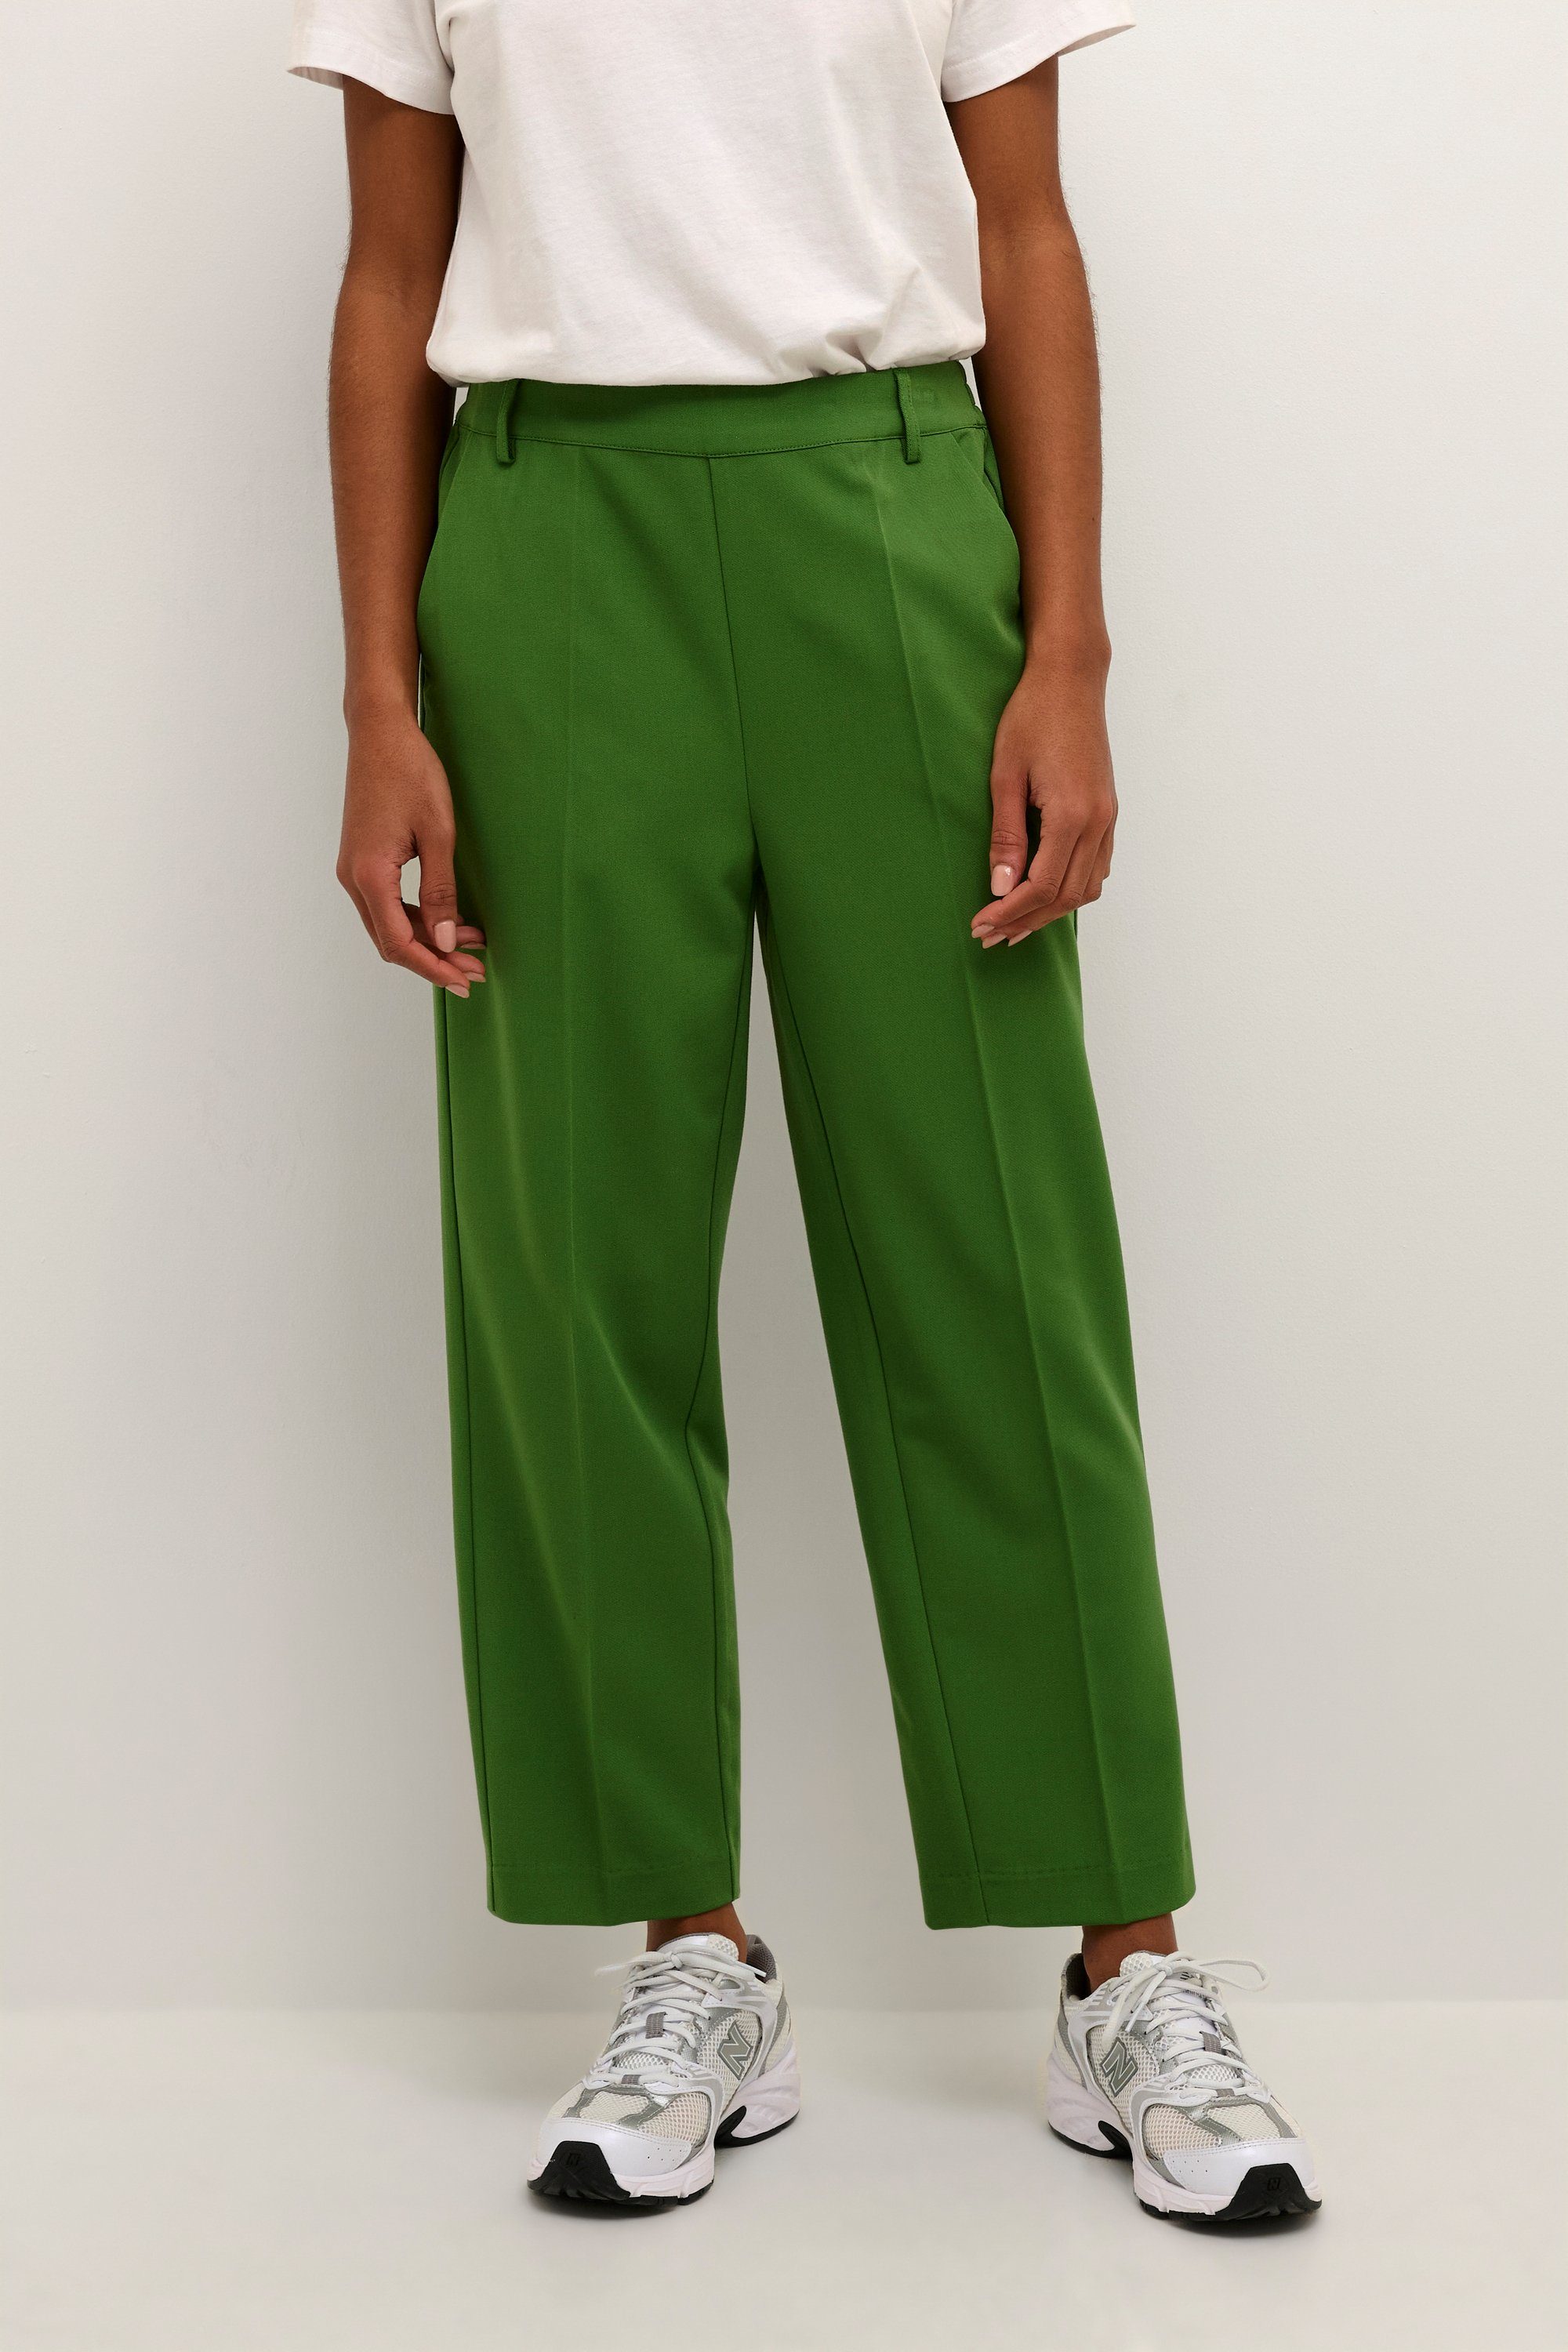 KAFFE Anzughose Pants Suiting KAsakura Artichoke Green